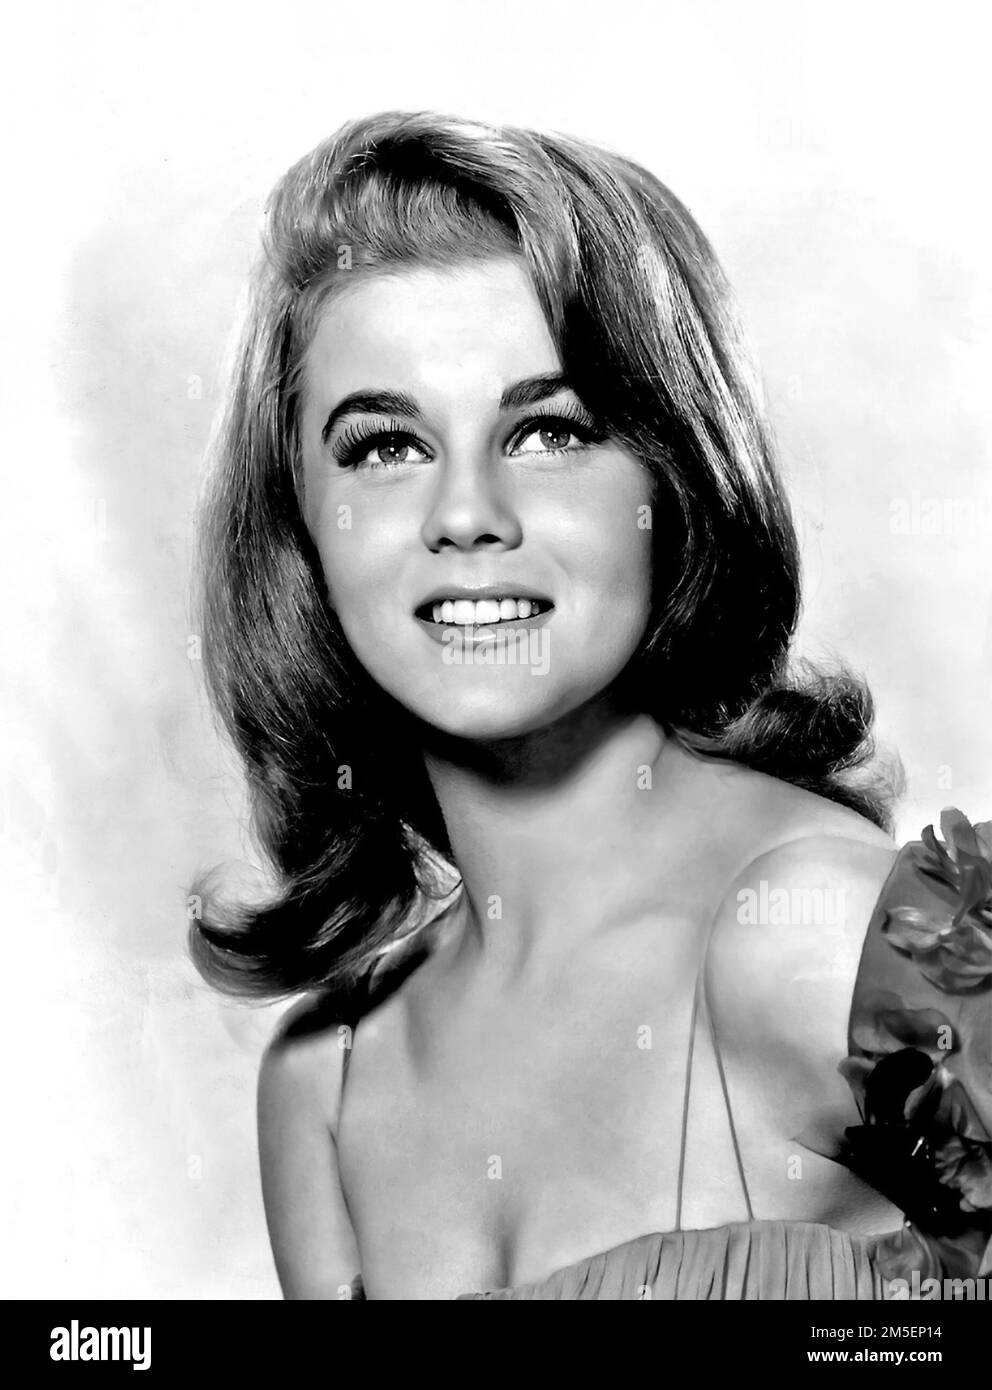 Ann-Margret. Publicity still of the Swedish–American actress Ann-Margret Olsson (b. 1941), 1963 Stock Photo